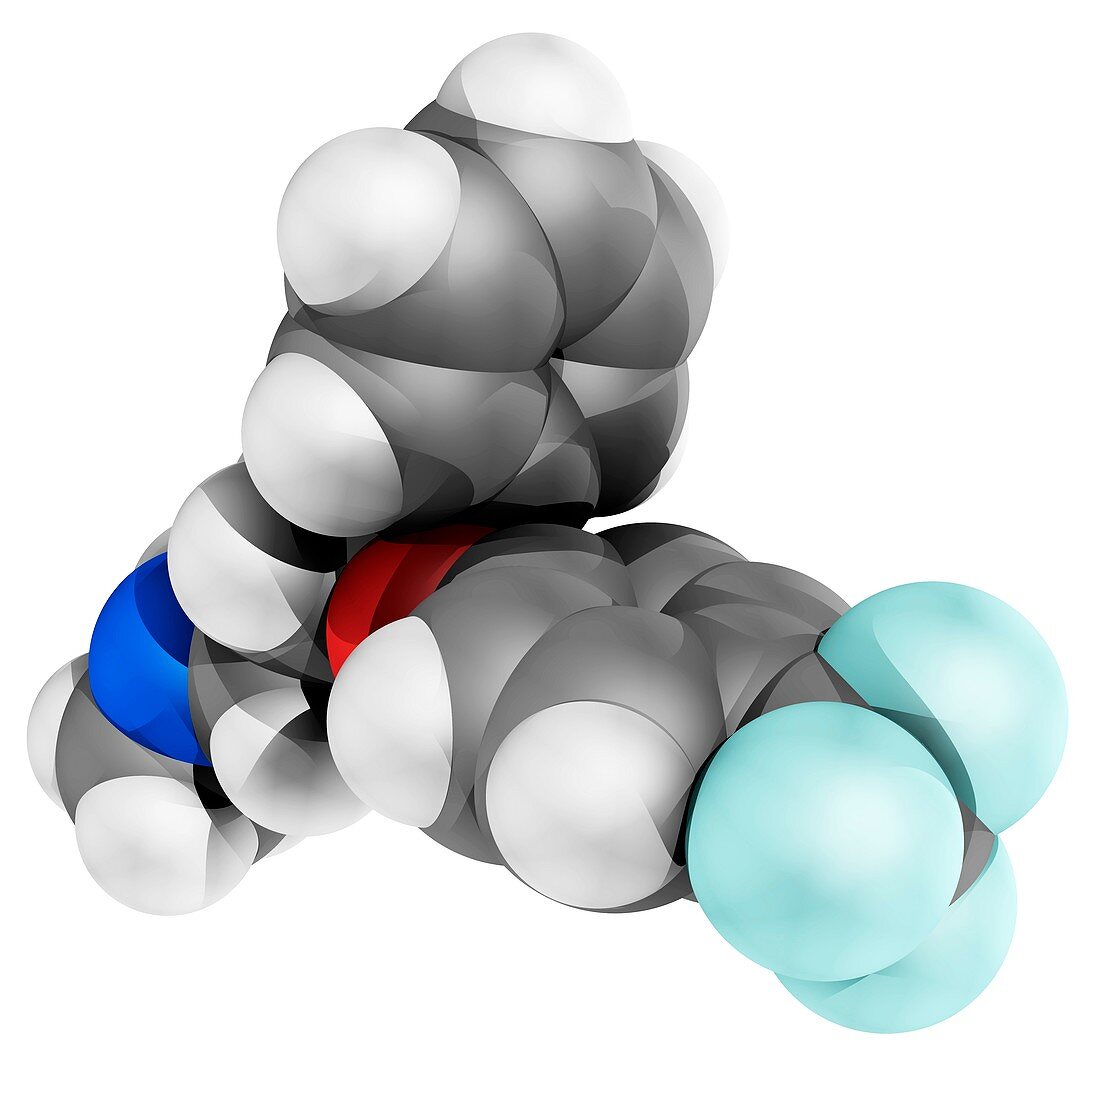 Fluoxetine antidepressant drug molecule